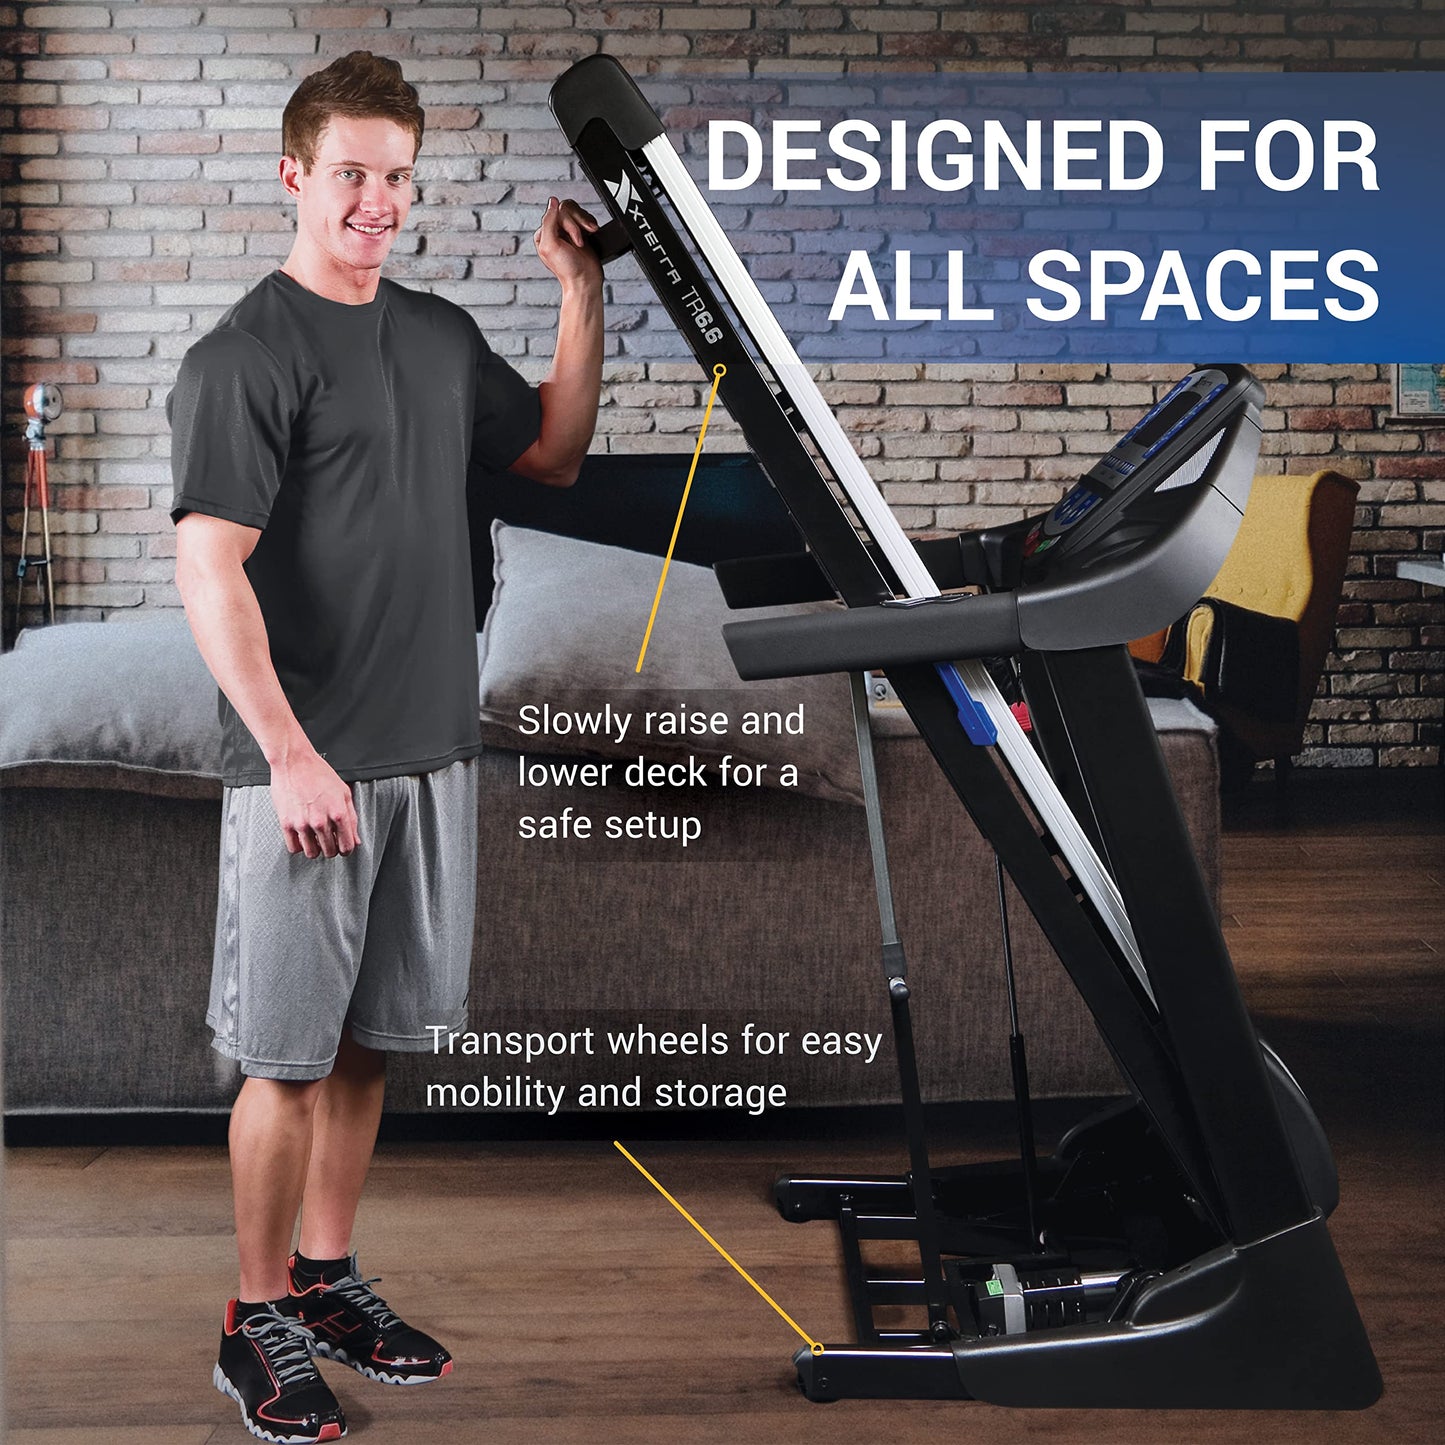 XTERRA Fitness TR6.6 Folding Treadmill, Black